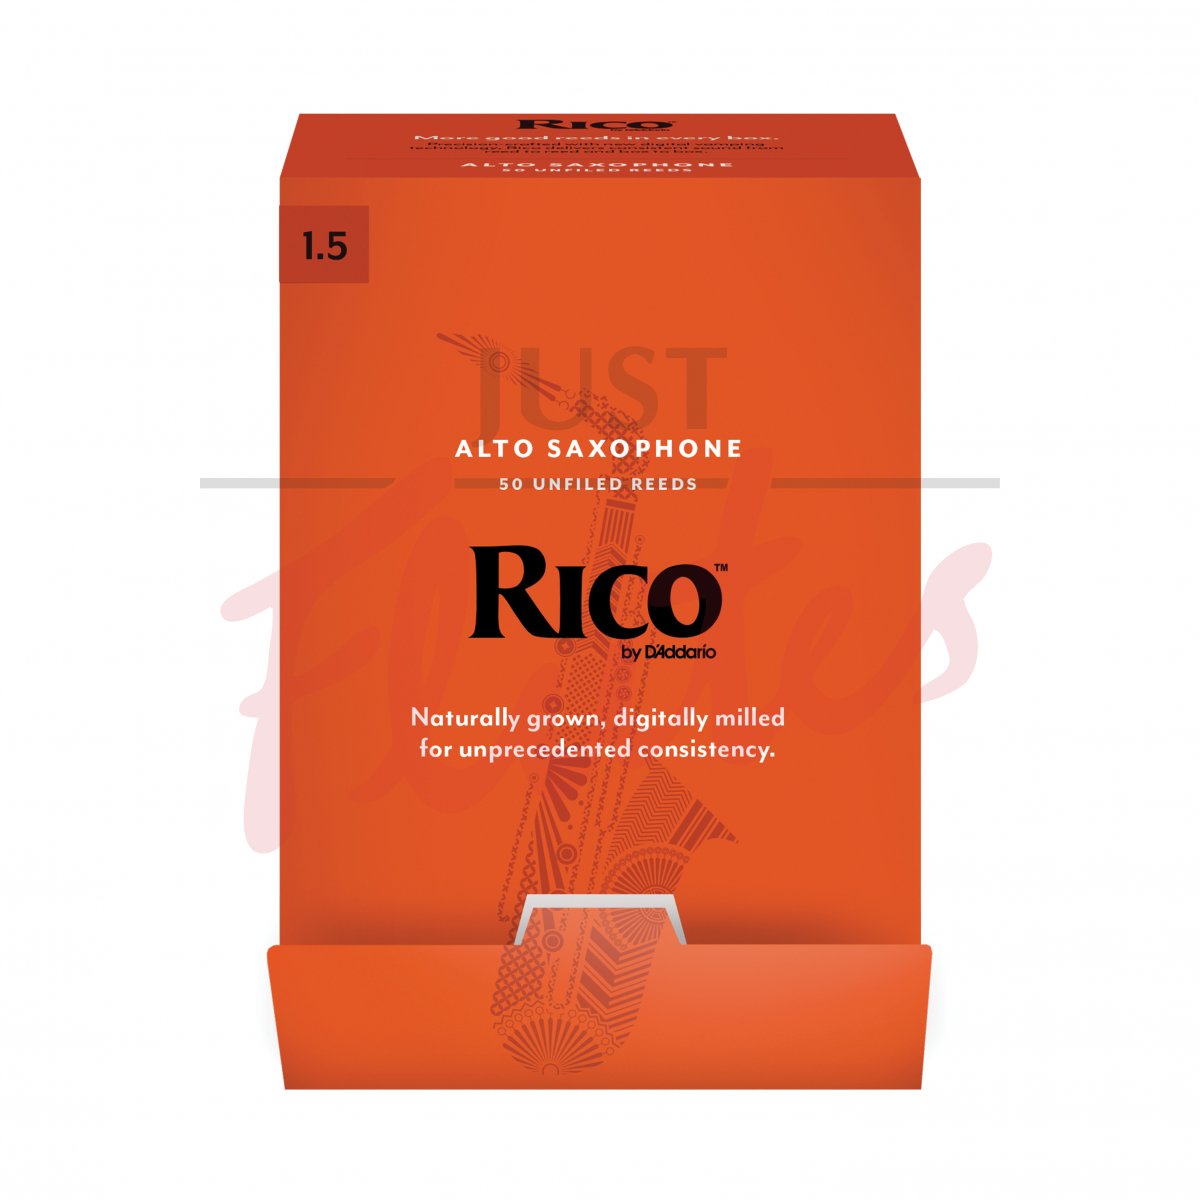 Rico by D'Addario RJA0115-50 Alto Saxophone Reeds, Strength 1.5, Bulk Pack of 50